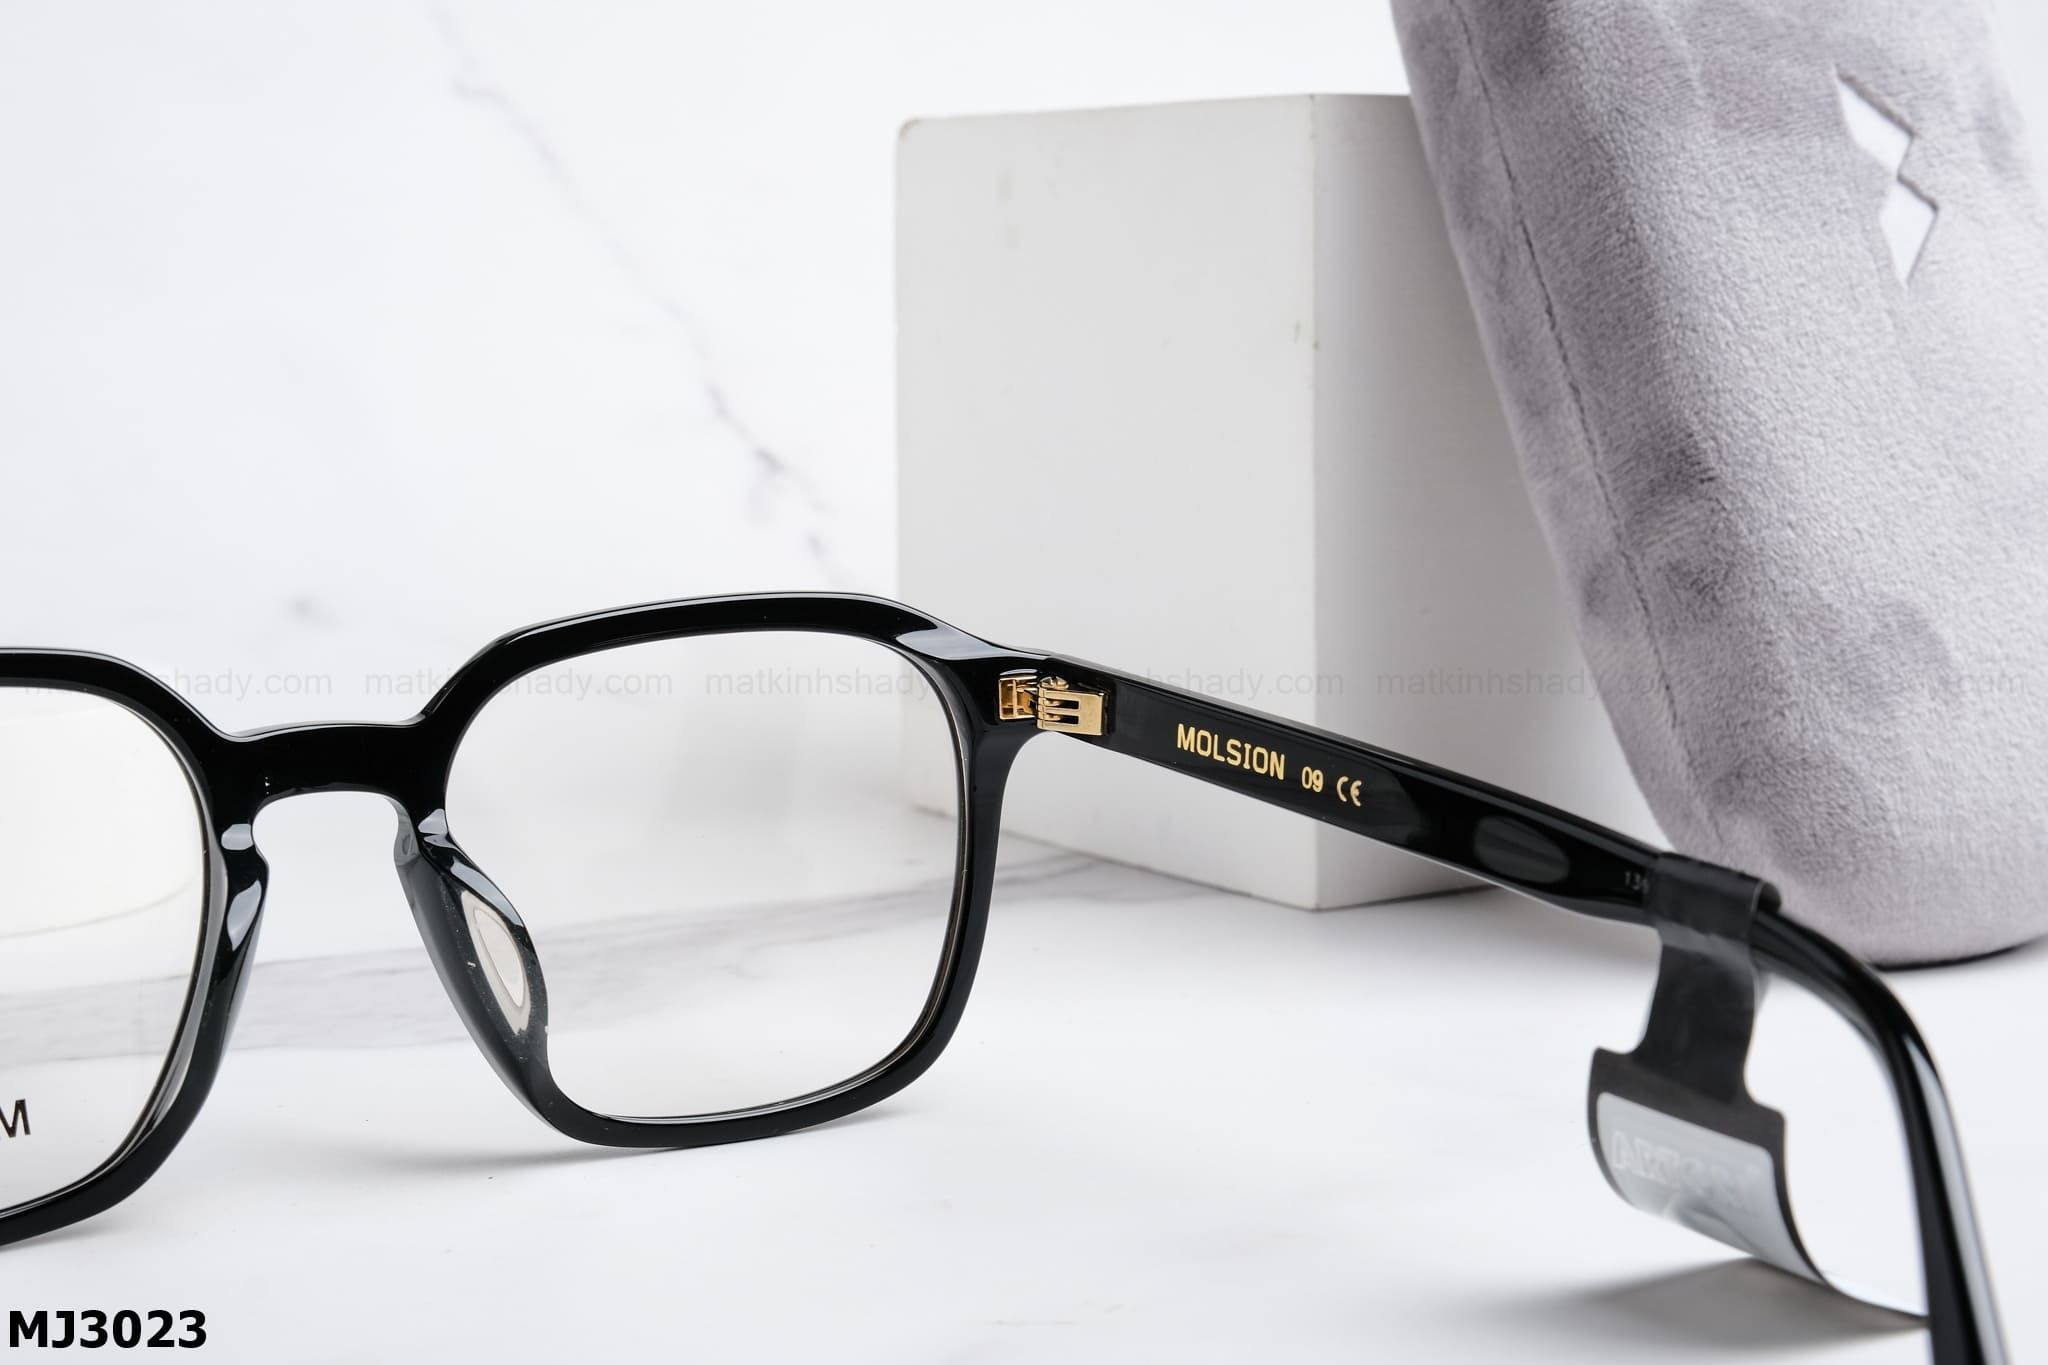  Molsion Eyewear - Glasses - MJ3023 